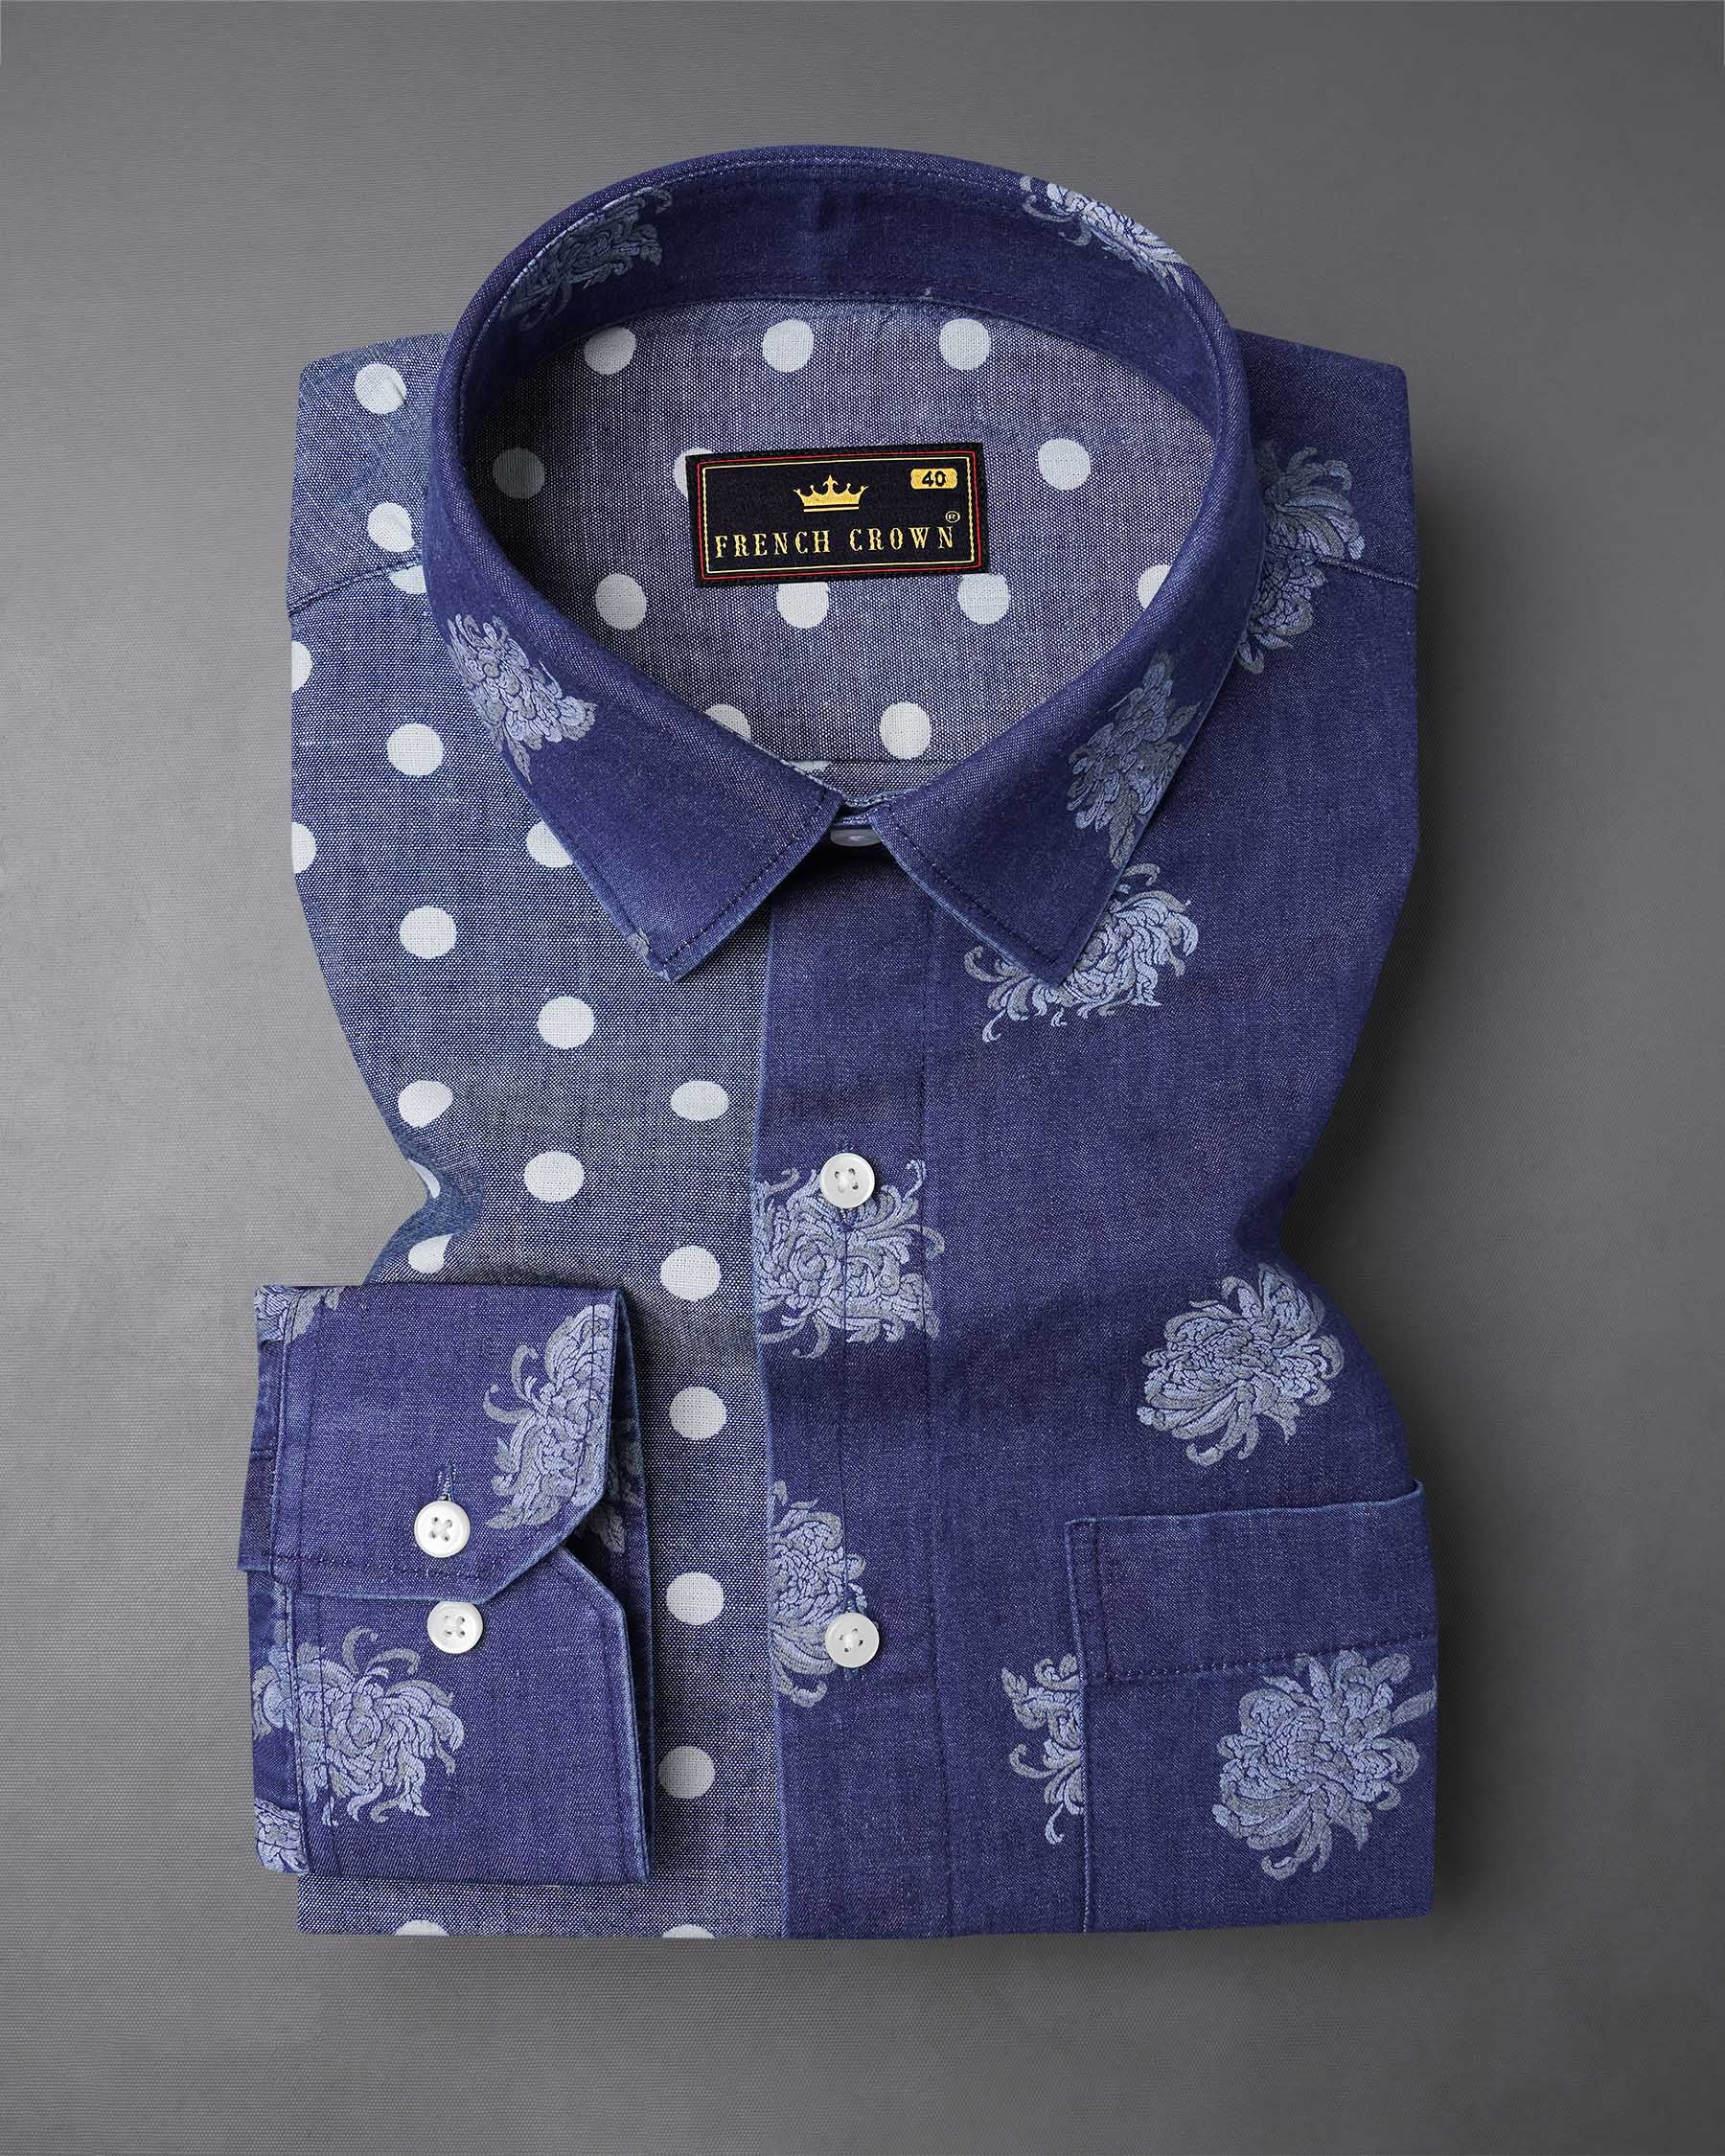 Gunpowder Blue Polka Dotted Chambray Textured Premium Cotton Designer denim Shirt 7777-P201-38, 7777-P201-39, 7777-P201-40, 7777-P201-42, 7777-P201-44, 7777-P201-46, 7777-P201-48, 7777-P201-50, 7777-P201-52